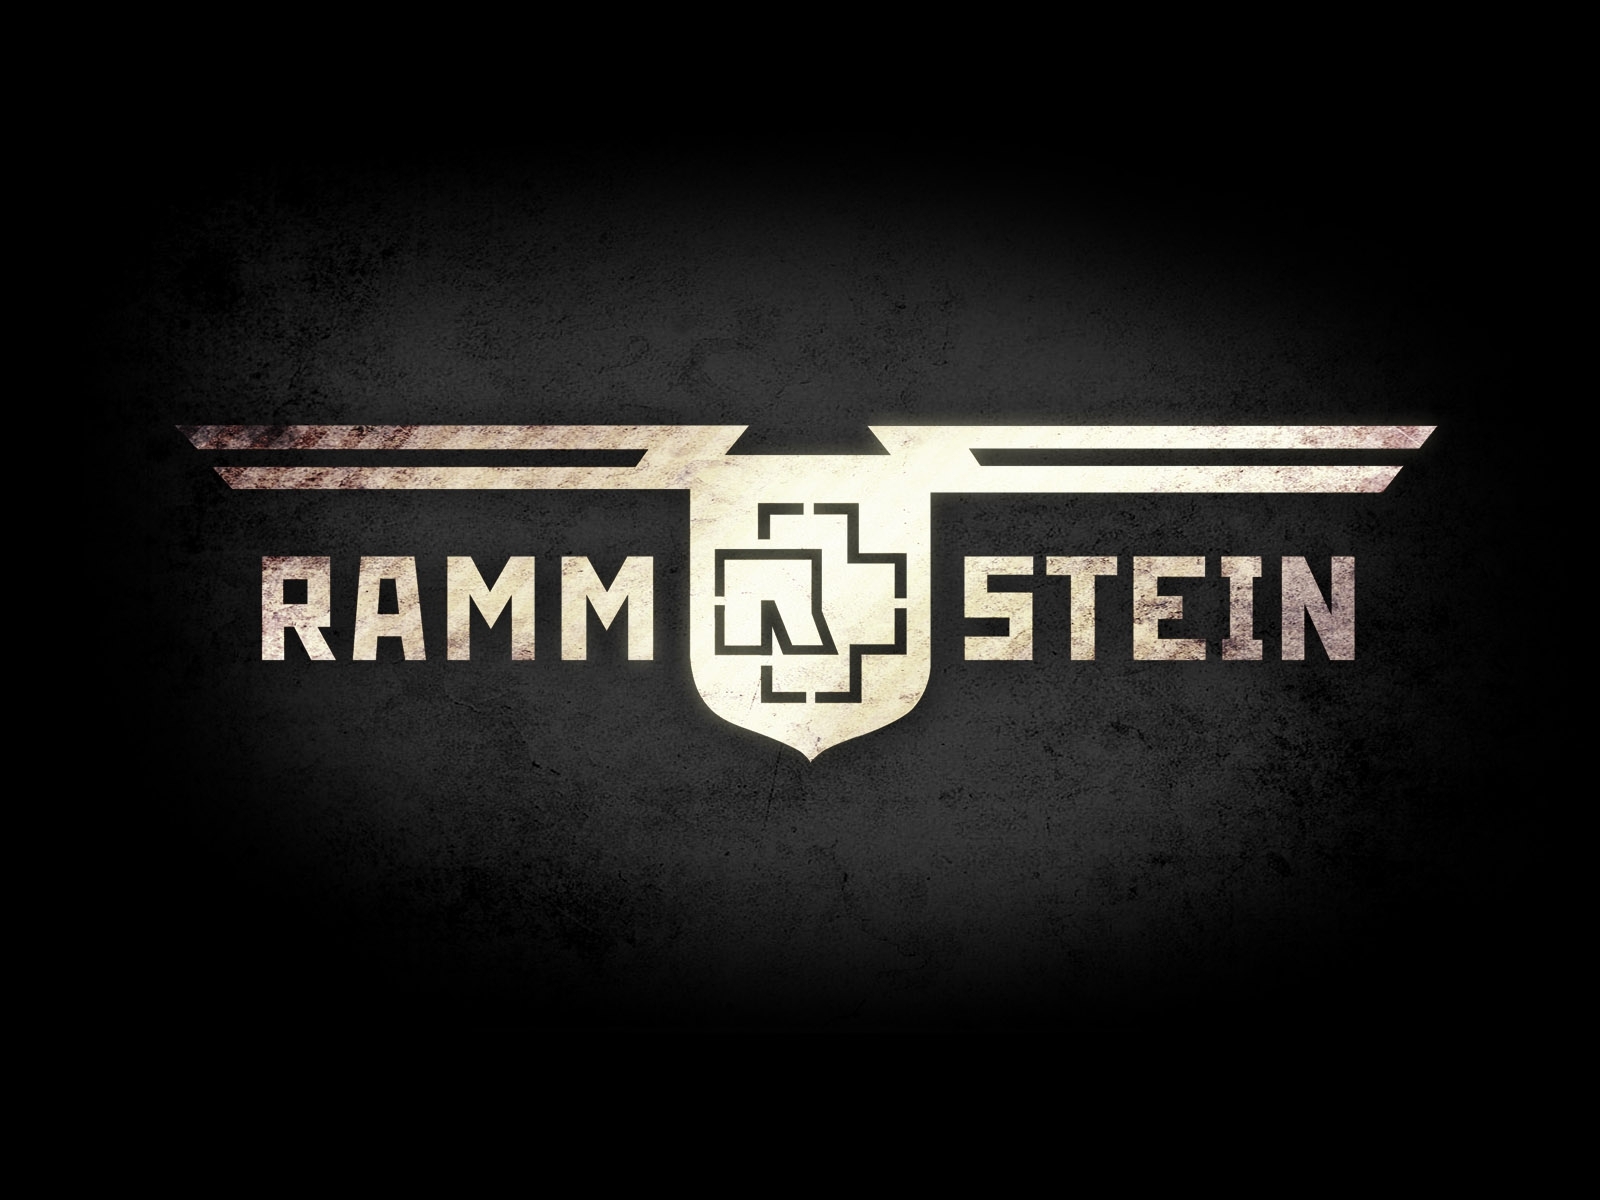 Rammstein - Reise, Reise (Rhythm guitar medley)